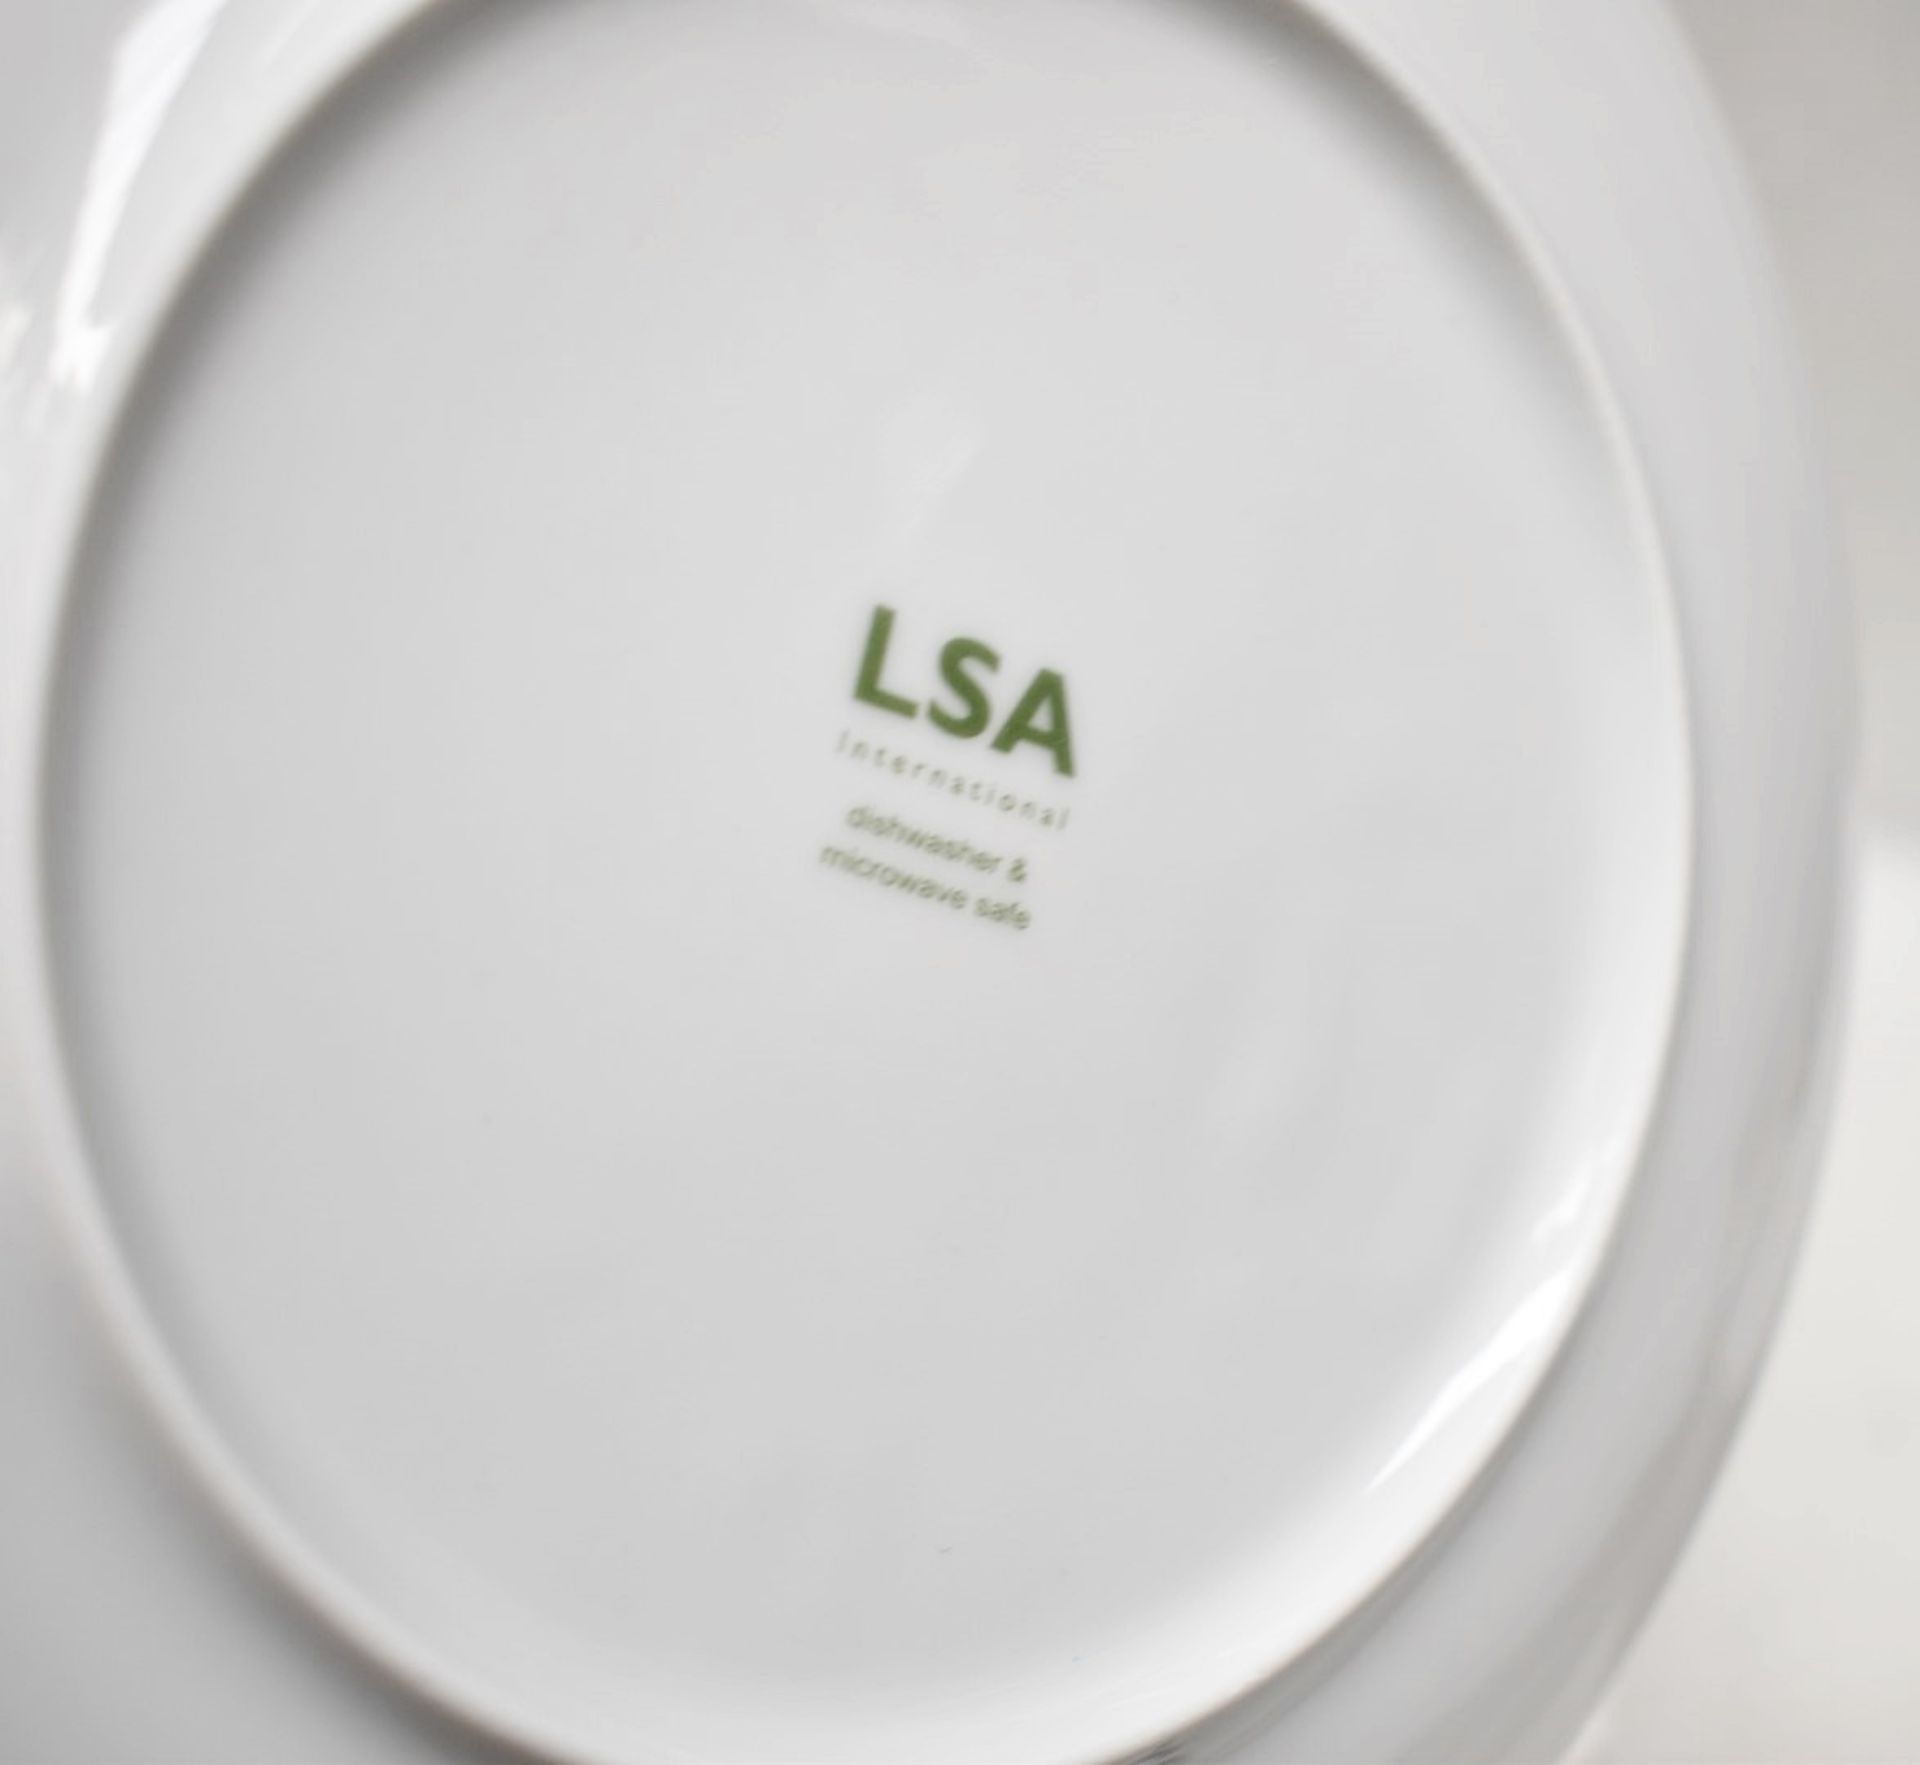 1 x LSA INTERNATIONAL 'Dine' Porcelain 15-Piece Tableware Assortment (No Bowls) - RRP £100.00 - Image 9 of 14